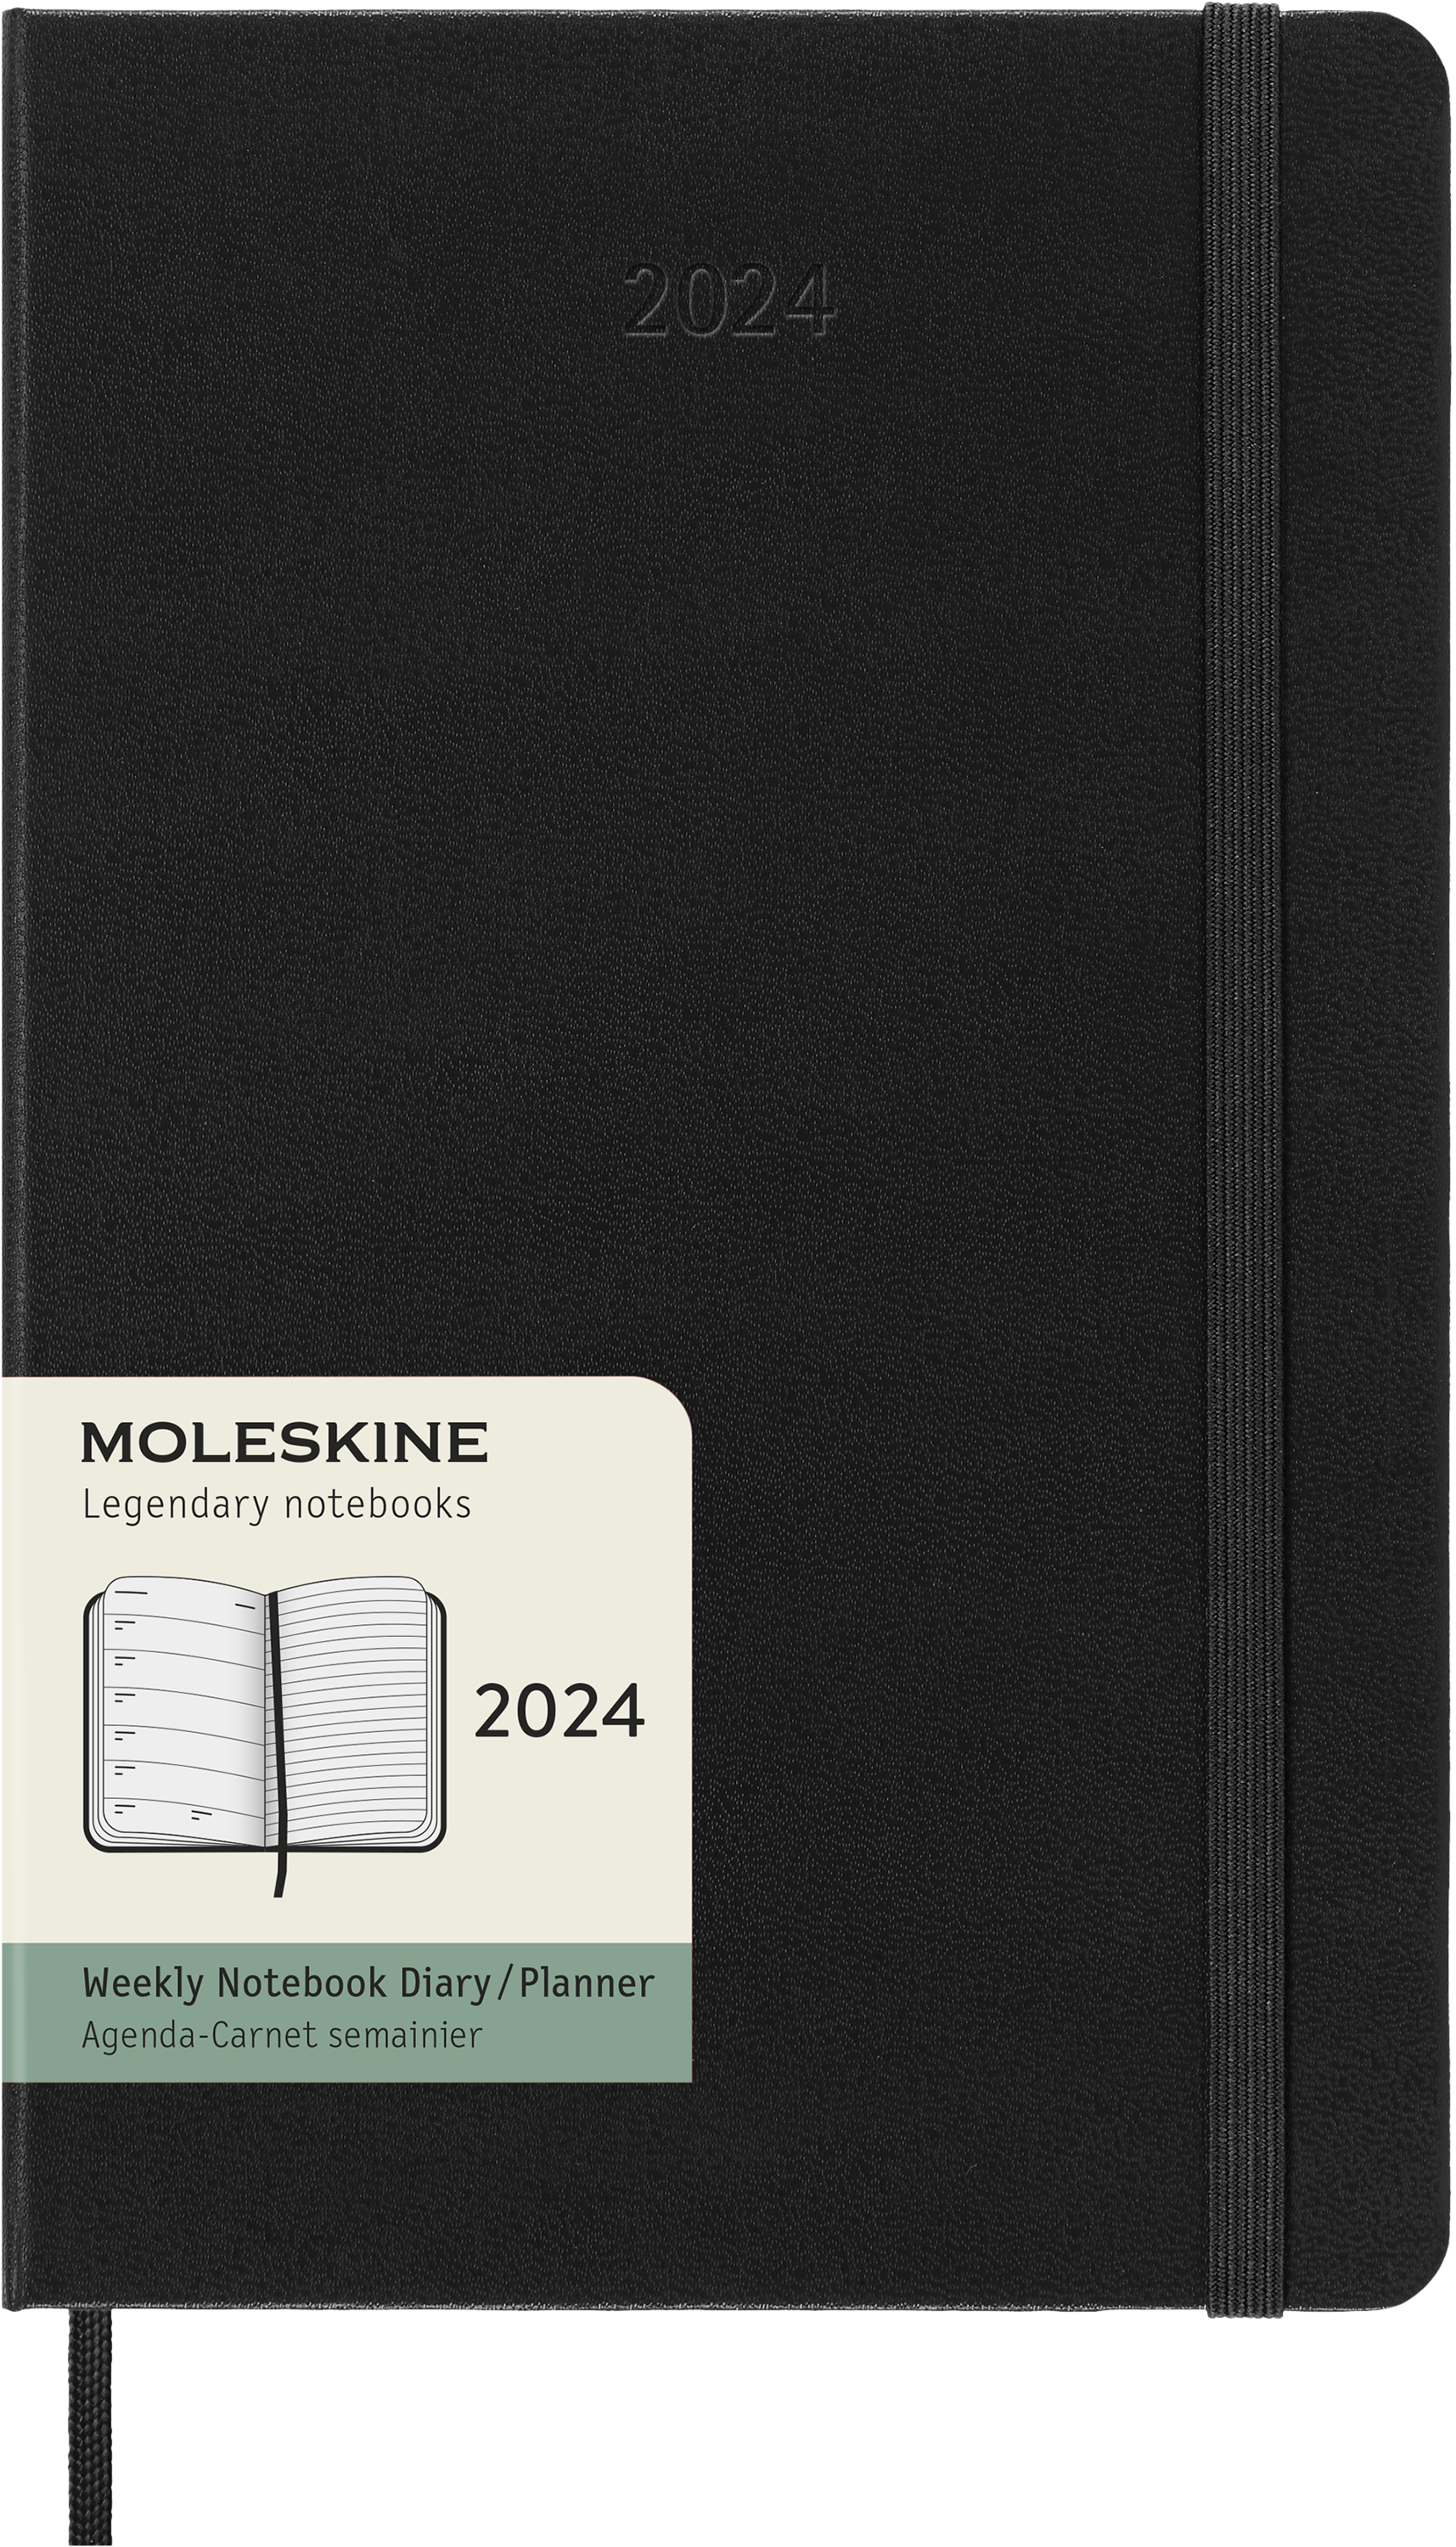 Moleskine 2024 Diary Hardcover large week